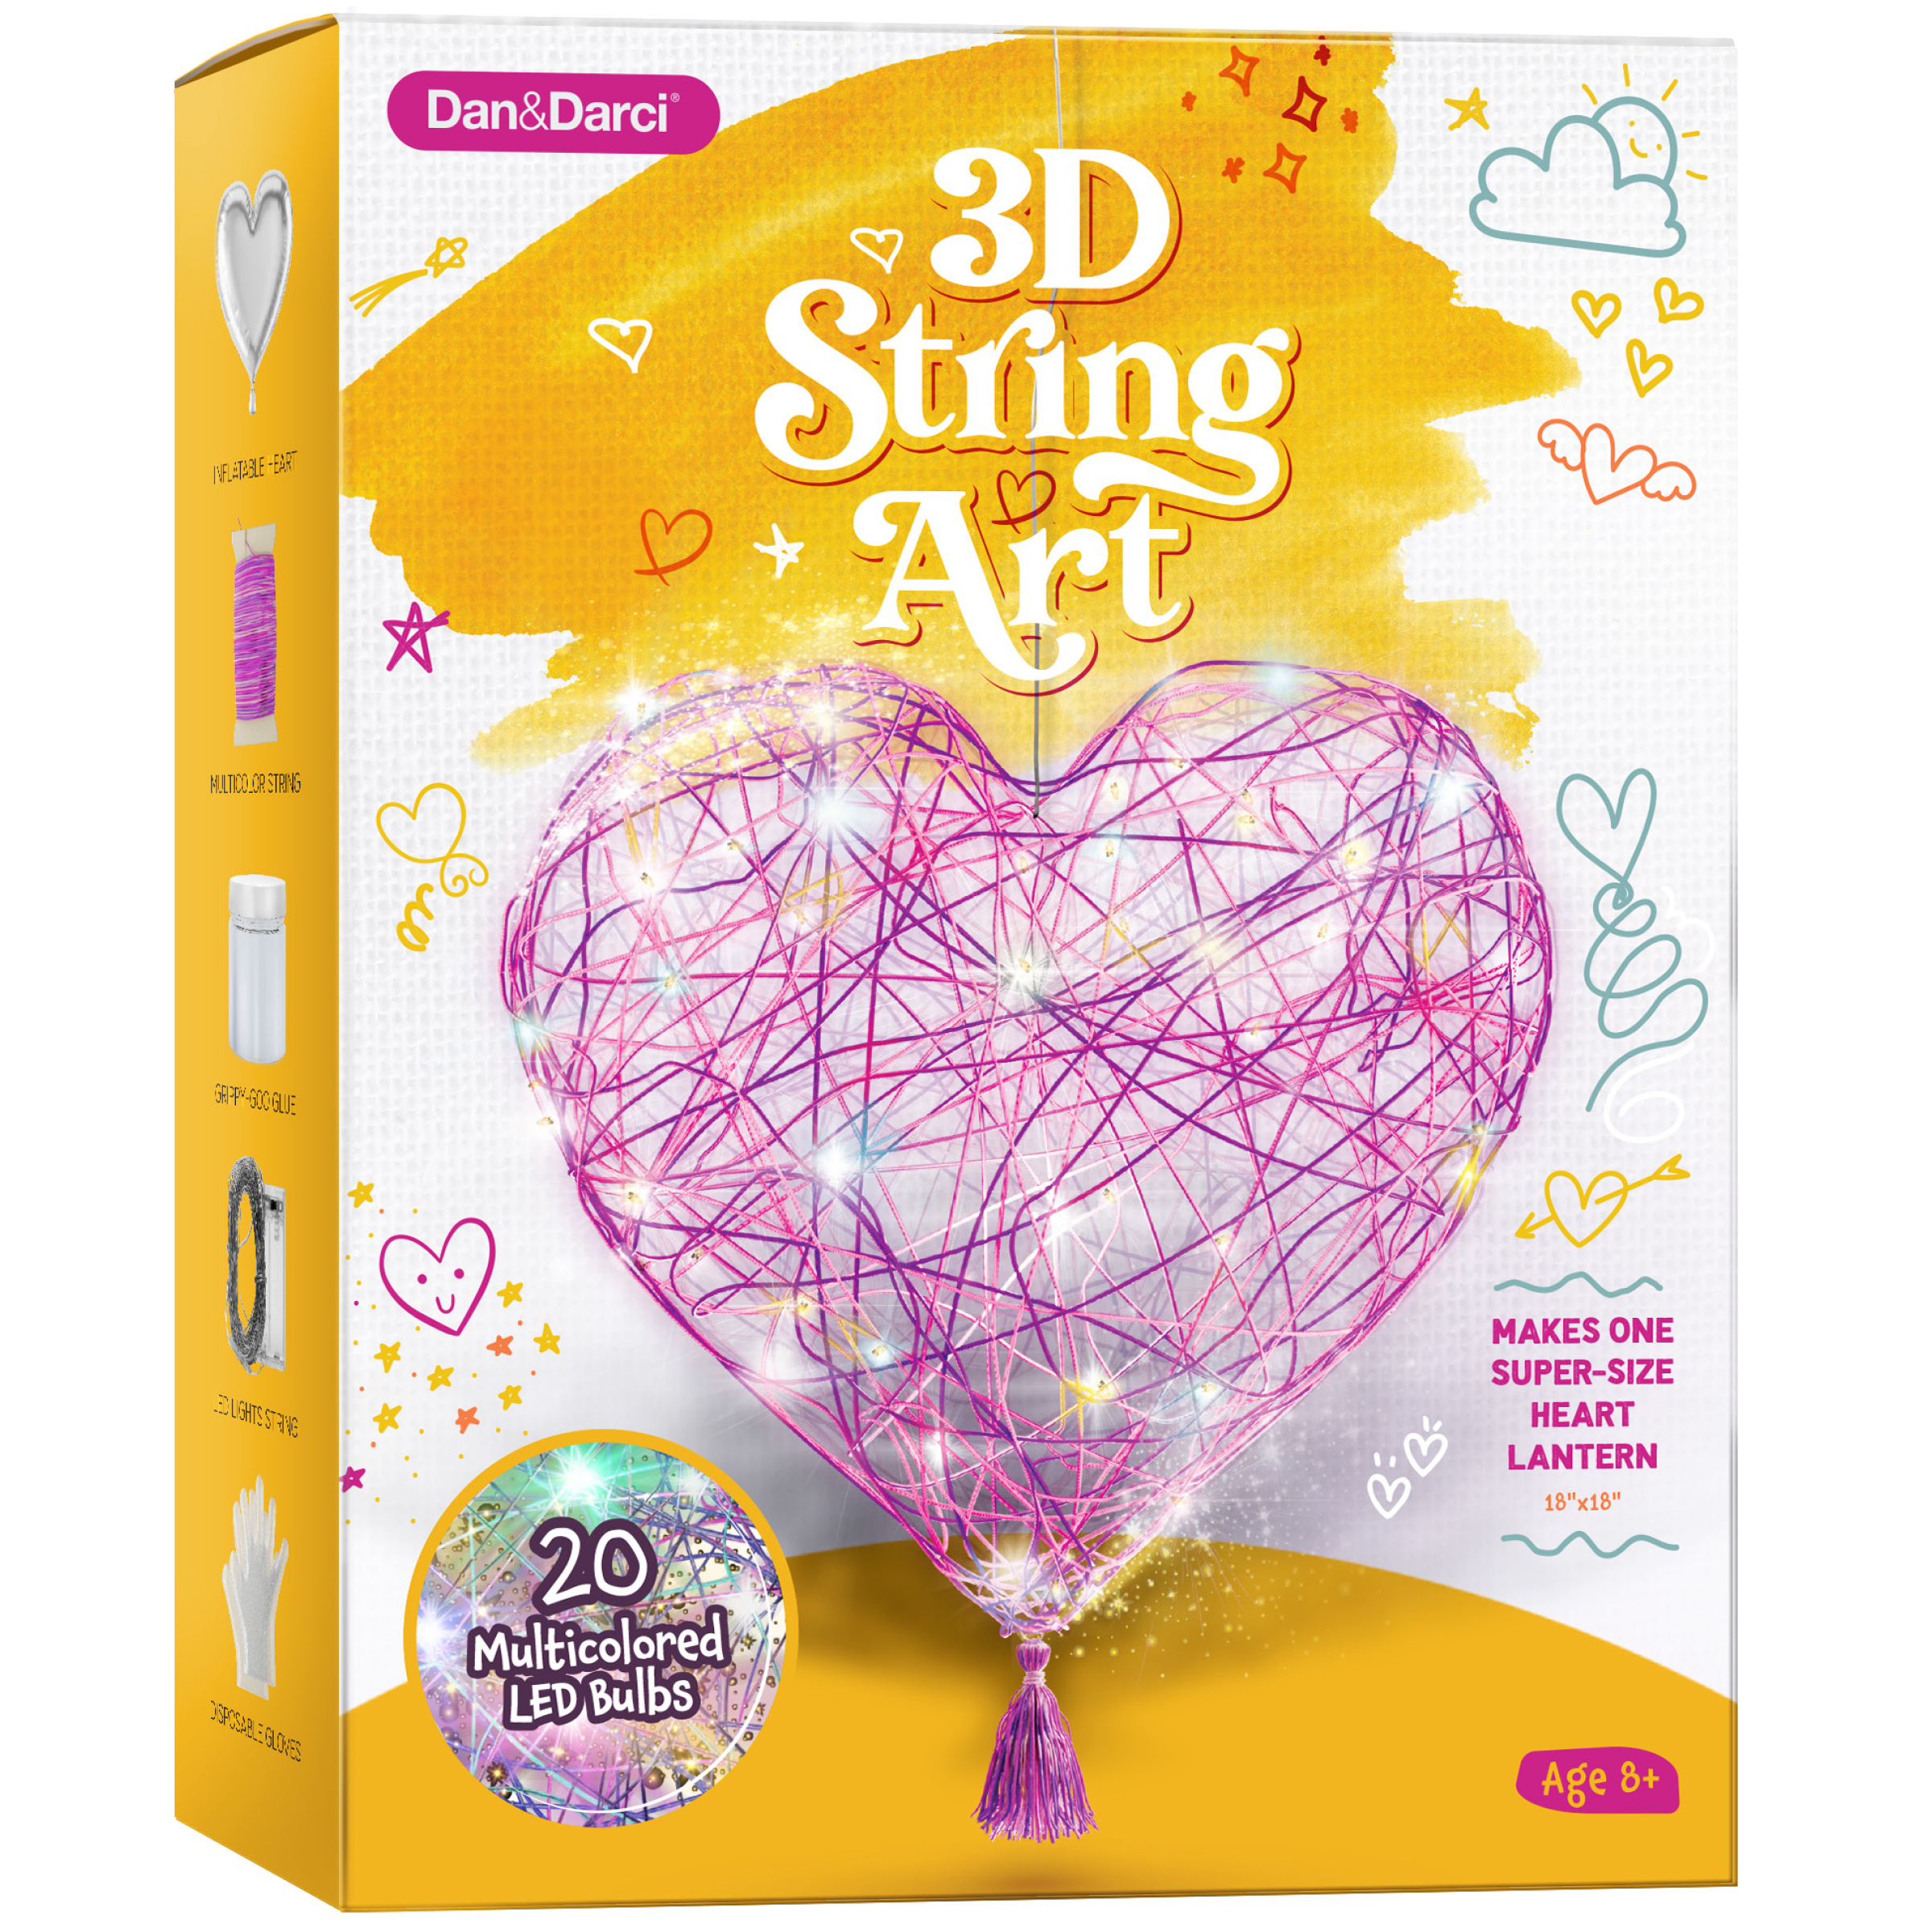 Dan&Darci 3D String Art Kit for Kids - Makes a Light-Up Heart